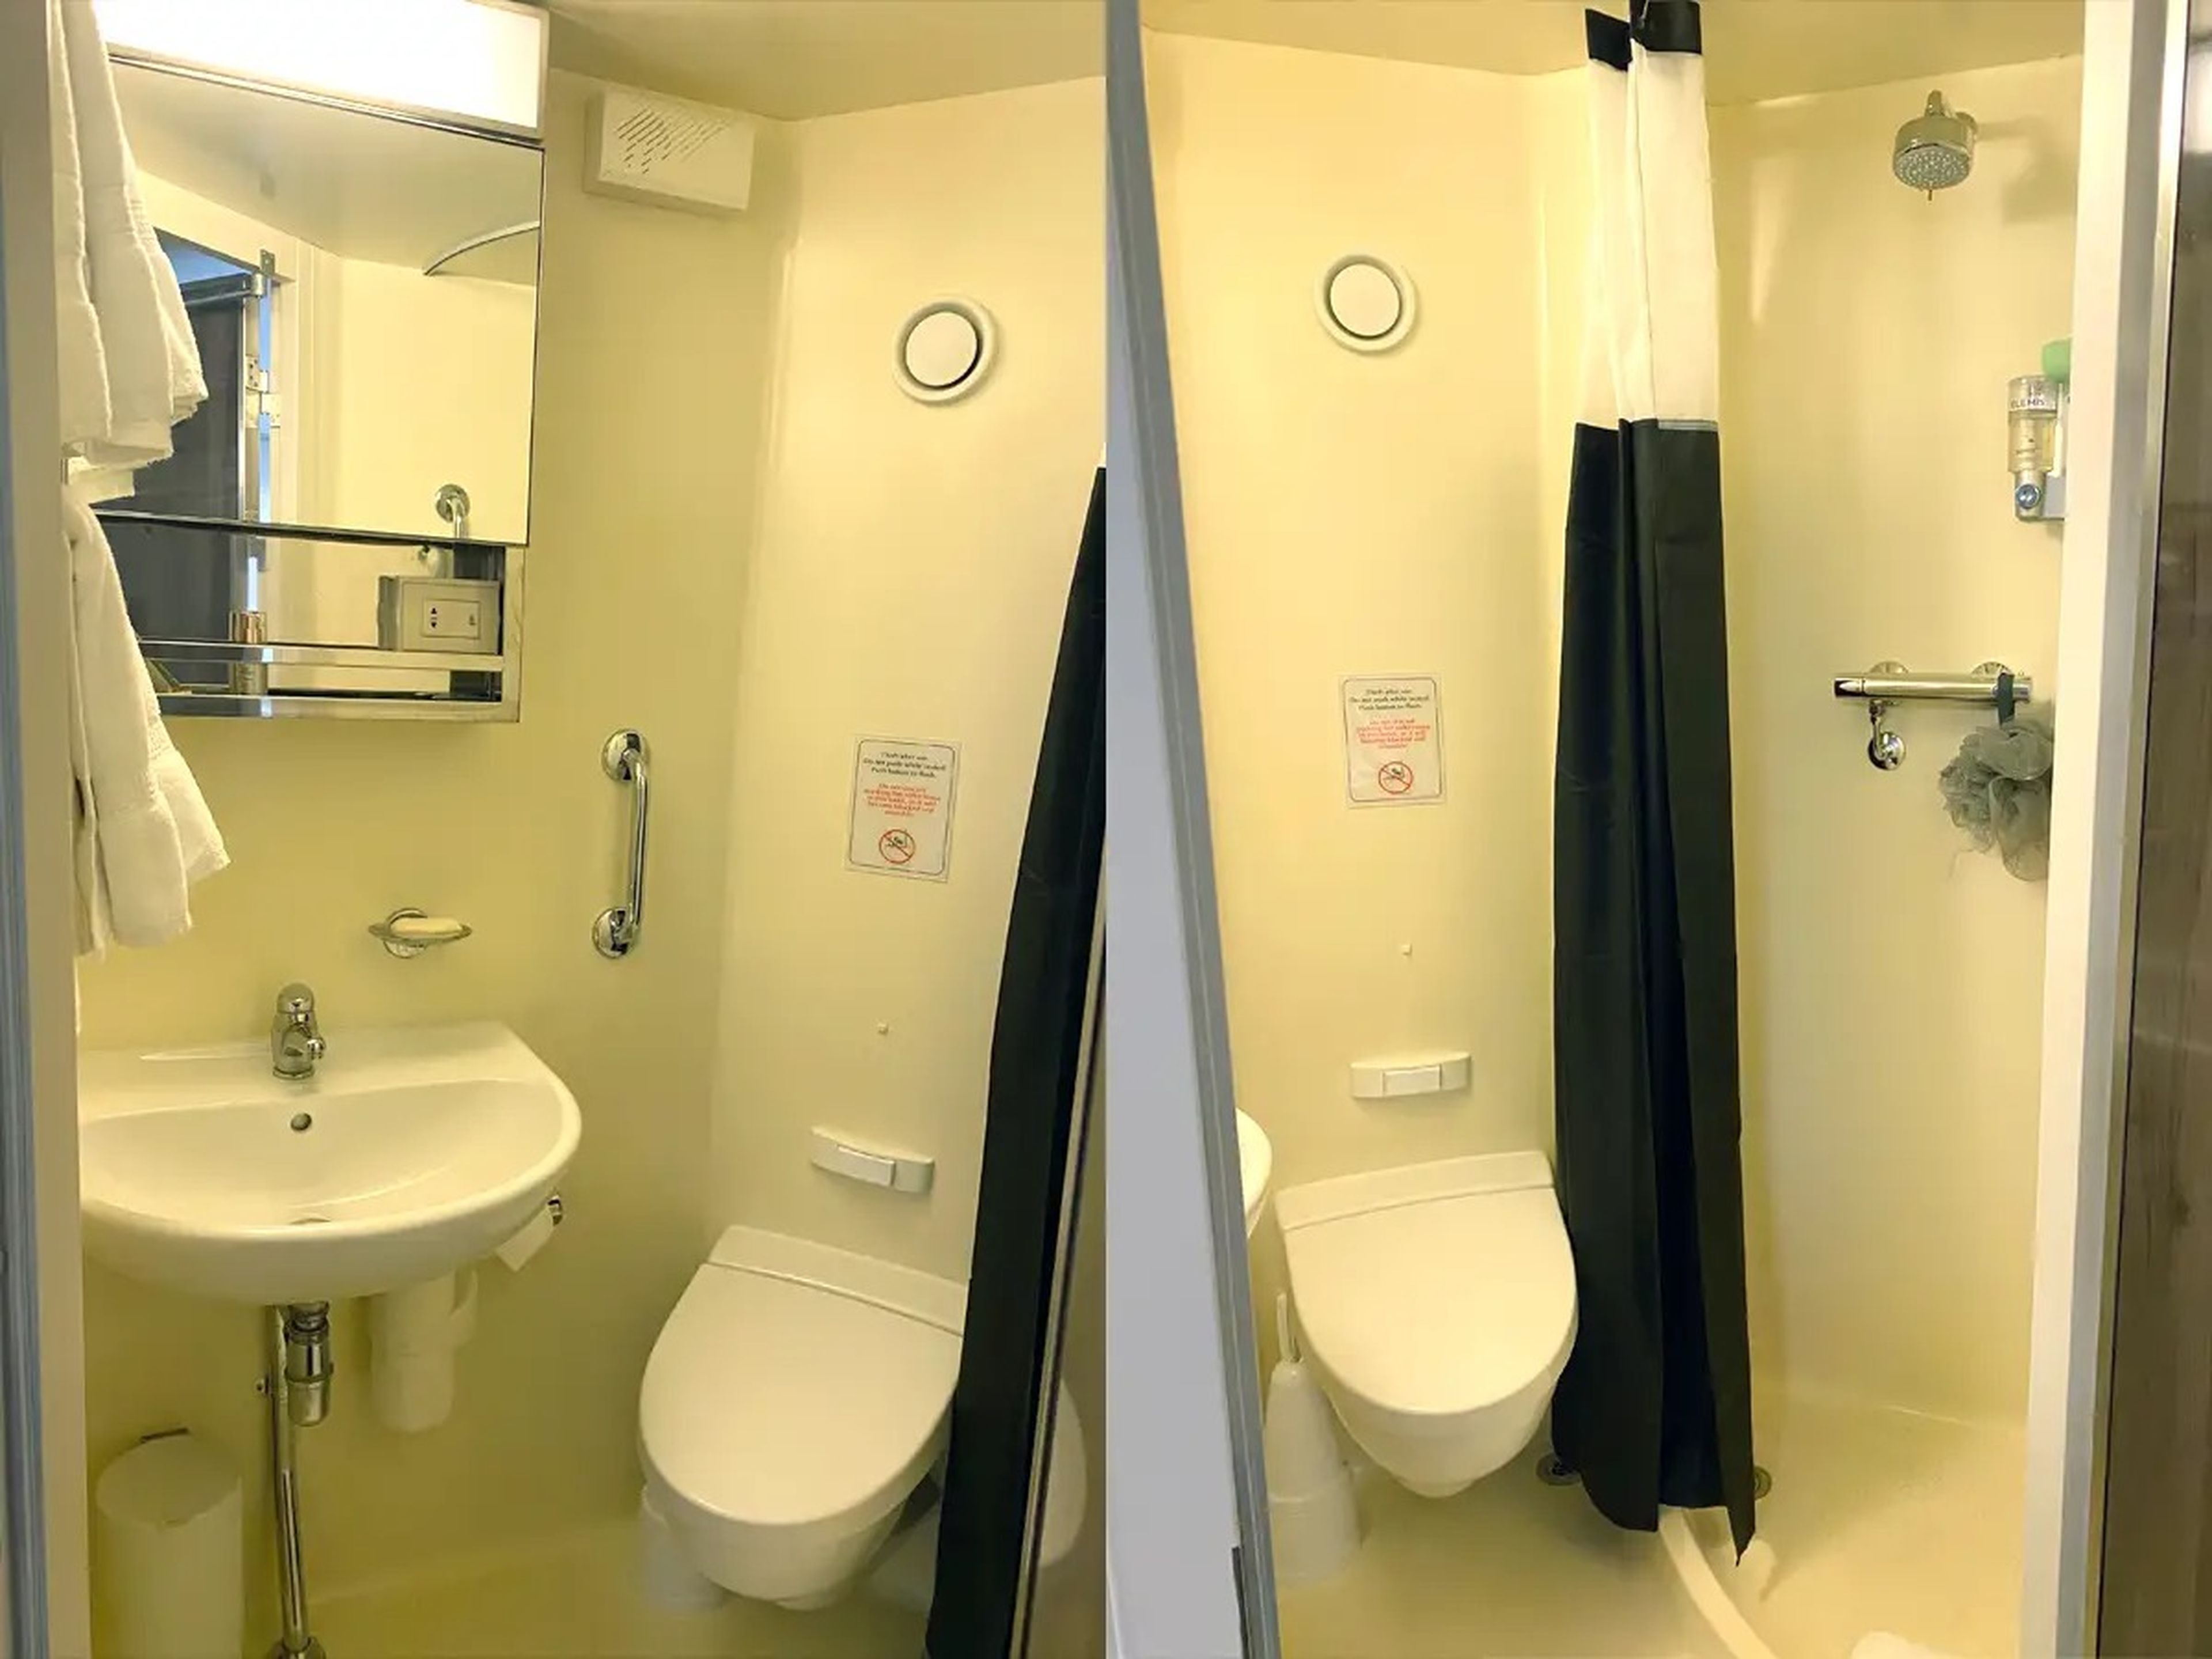 cruise ship bathroom sink toilet, shower